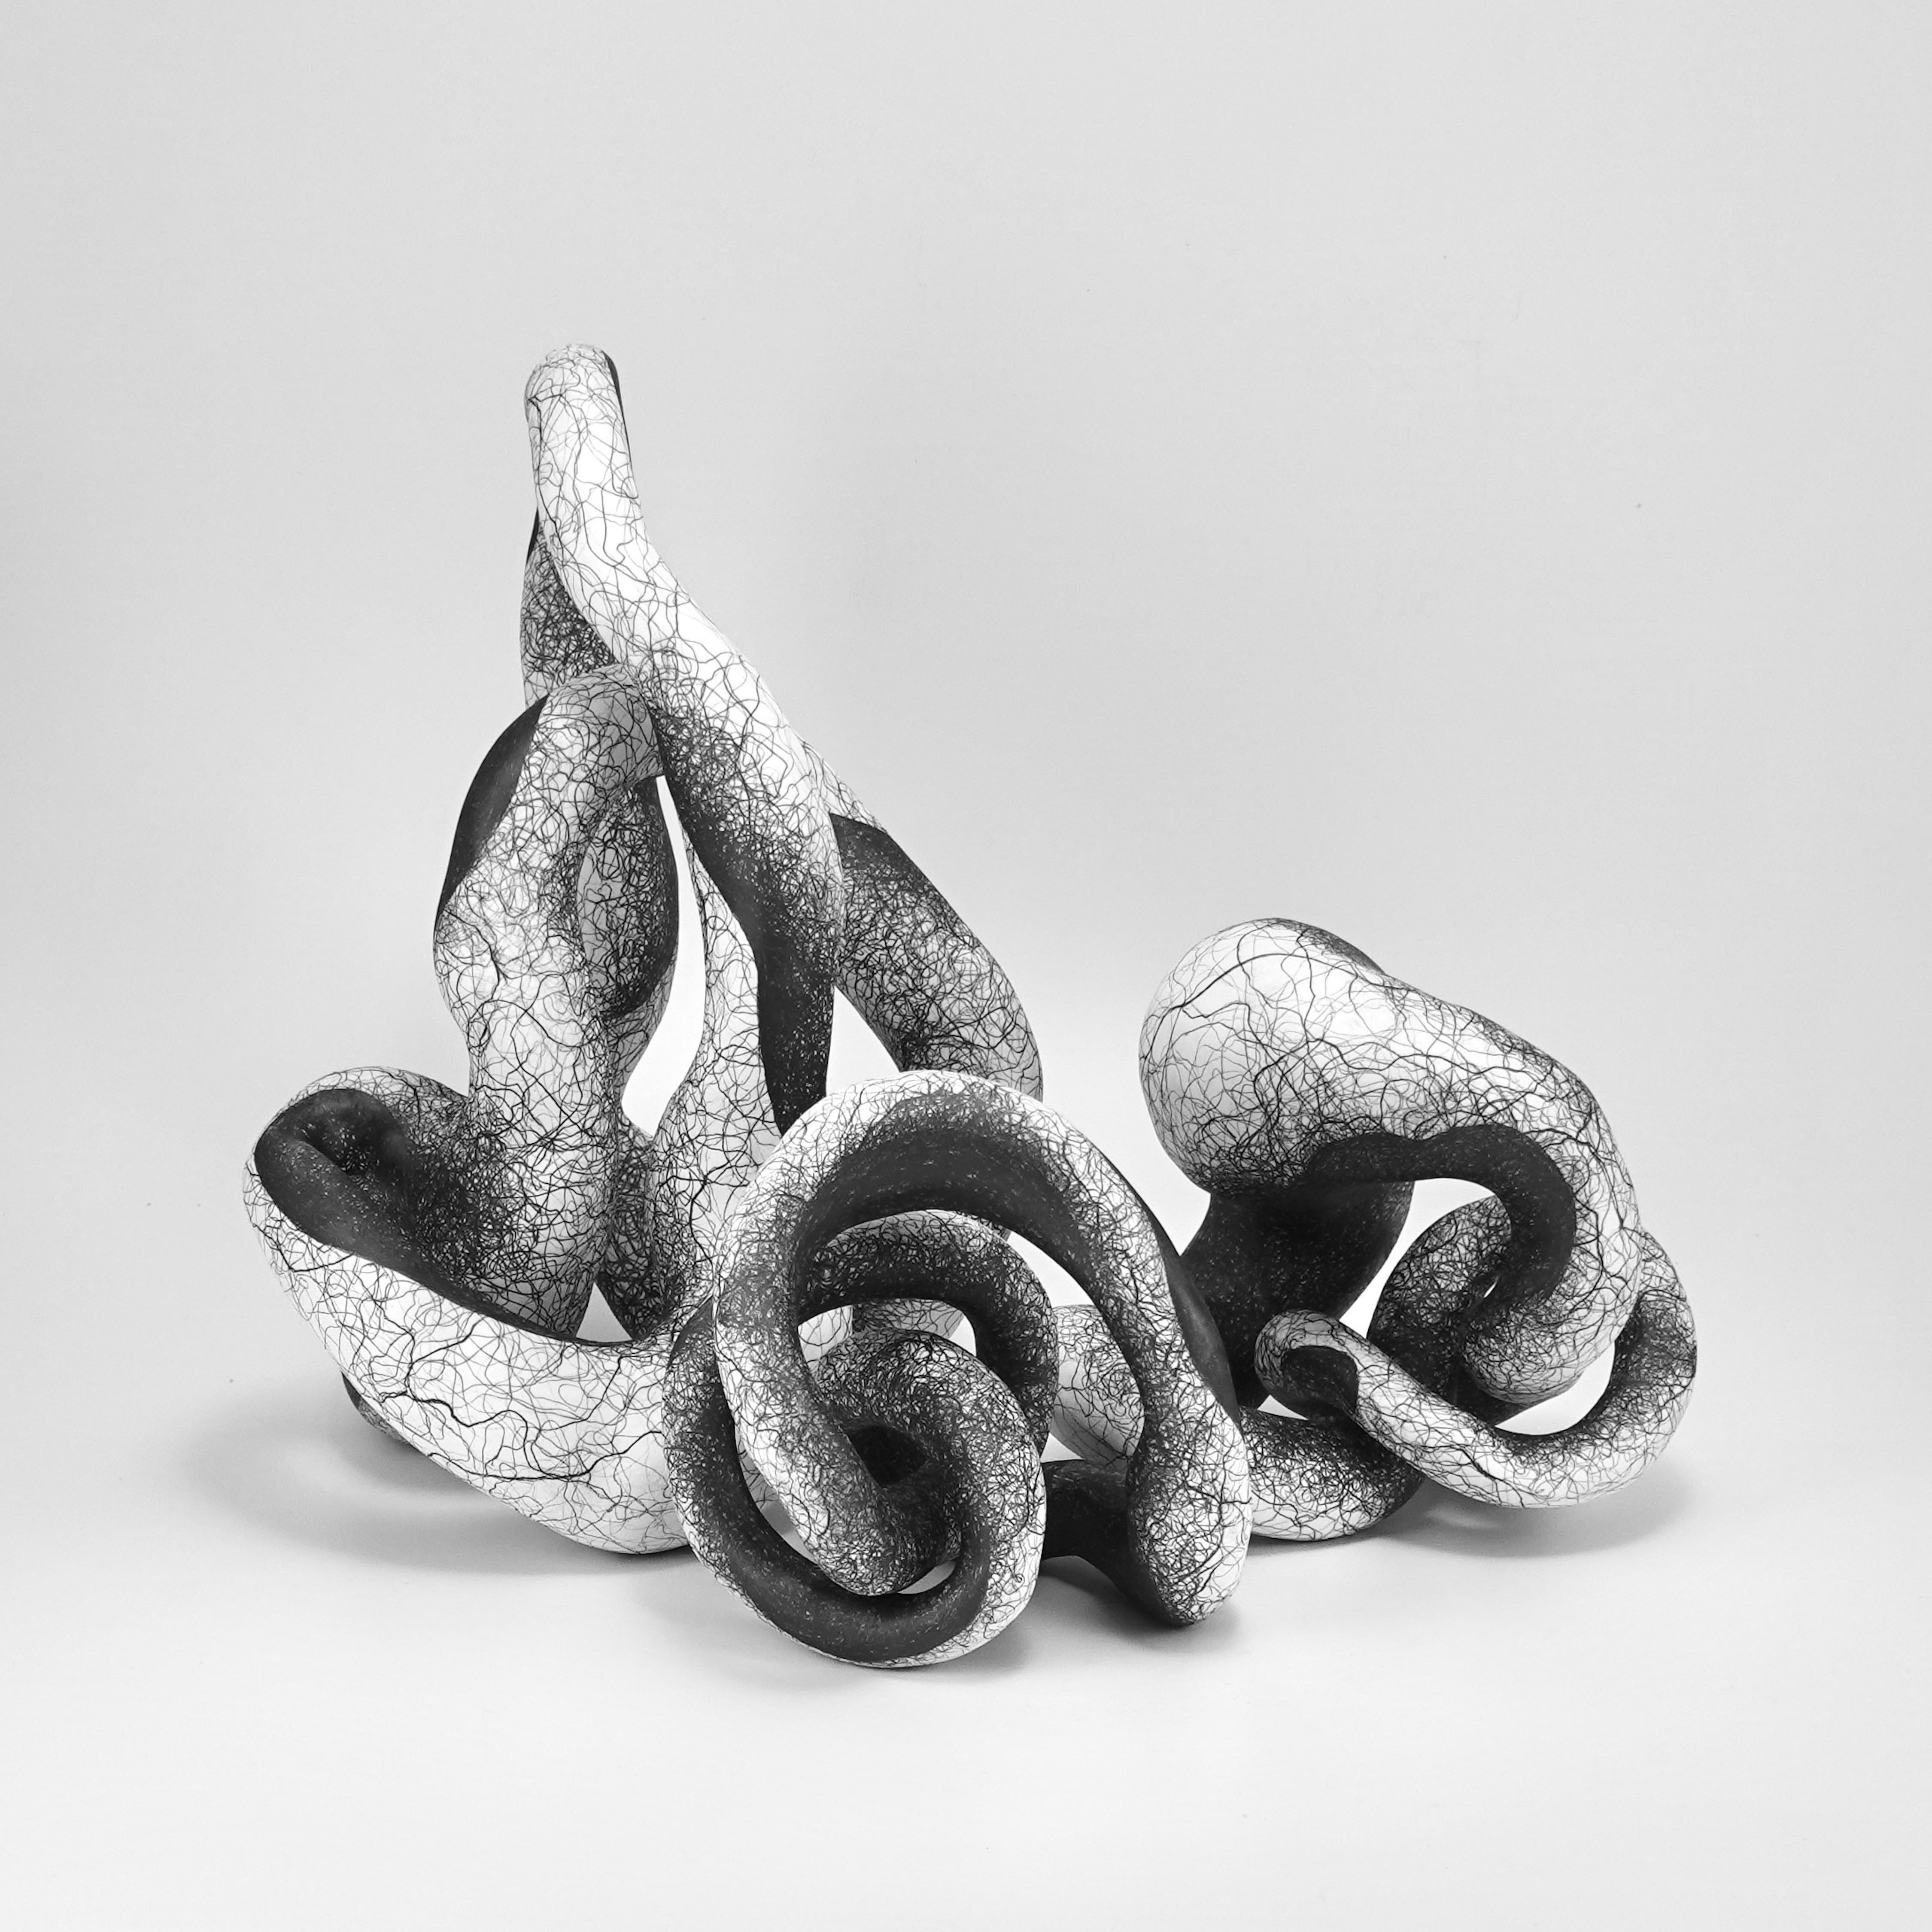 Abstract Sculpture Judi Tavill -  Sculpture abstraite en argile : « Trioangle Trio »